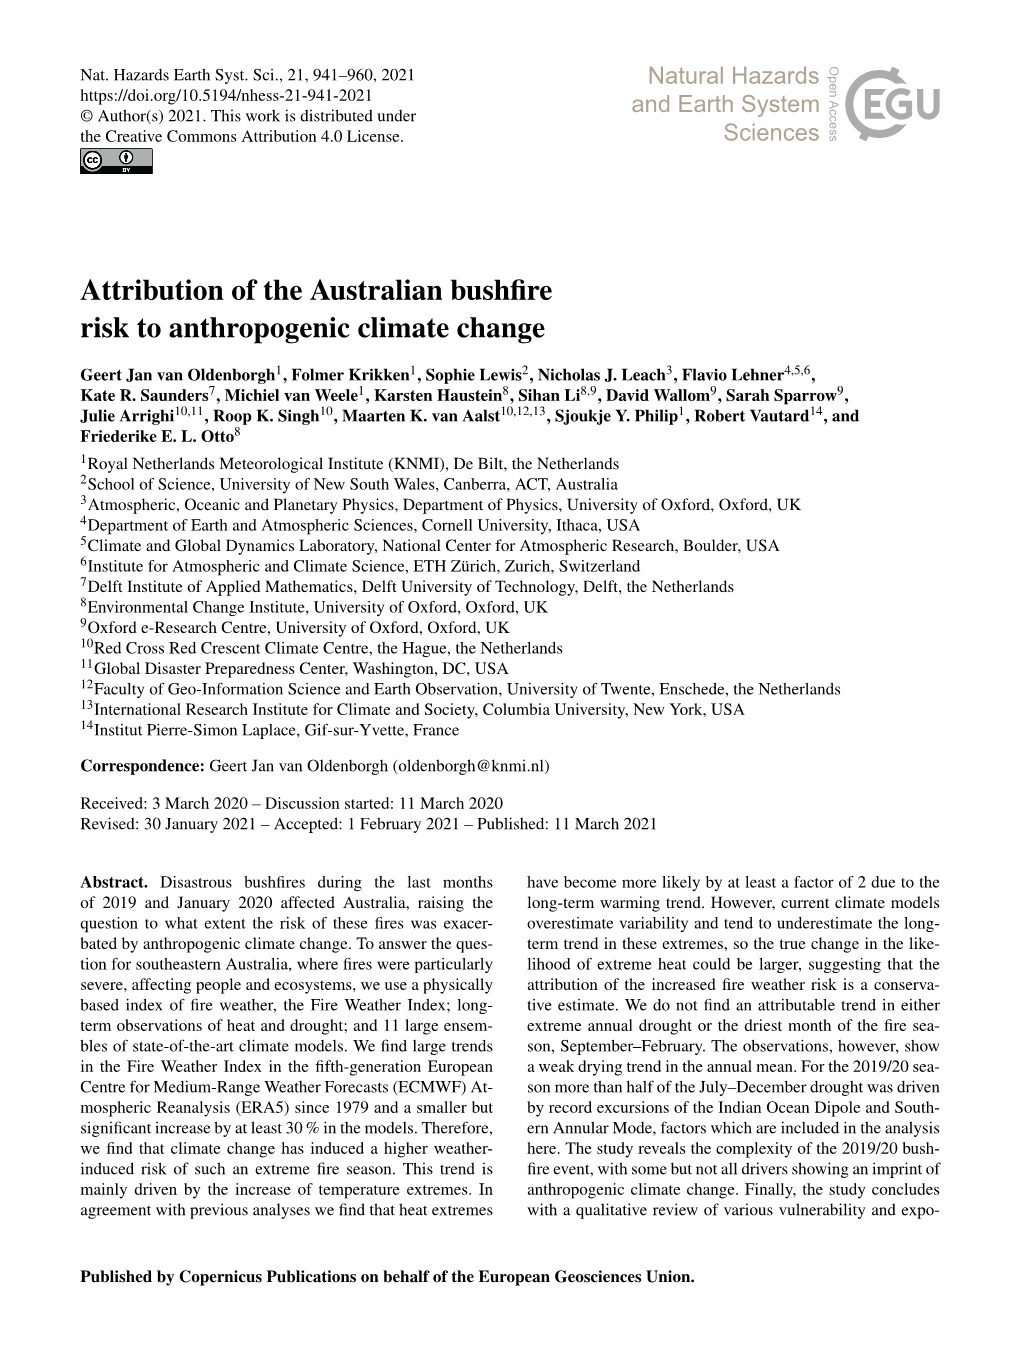 Attribution of the Australian Bushfire Risk to Anthropogenic Climate Change